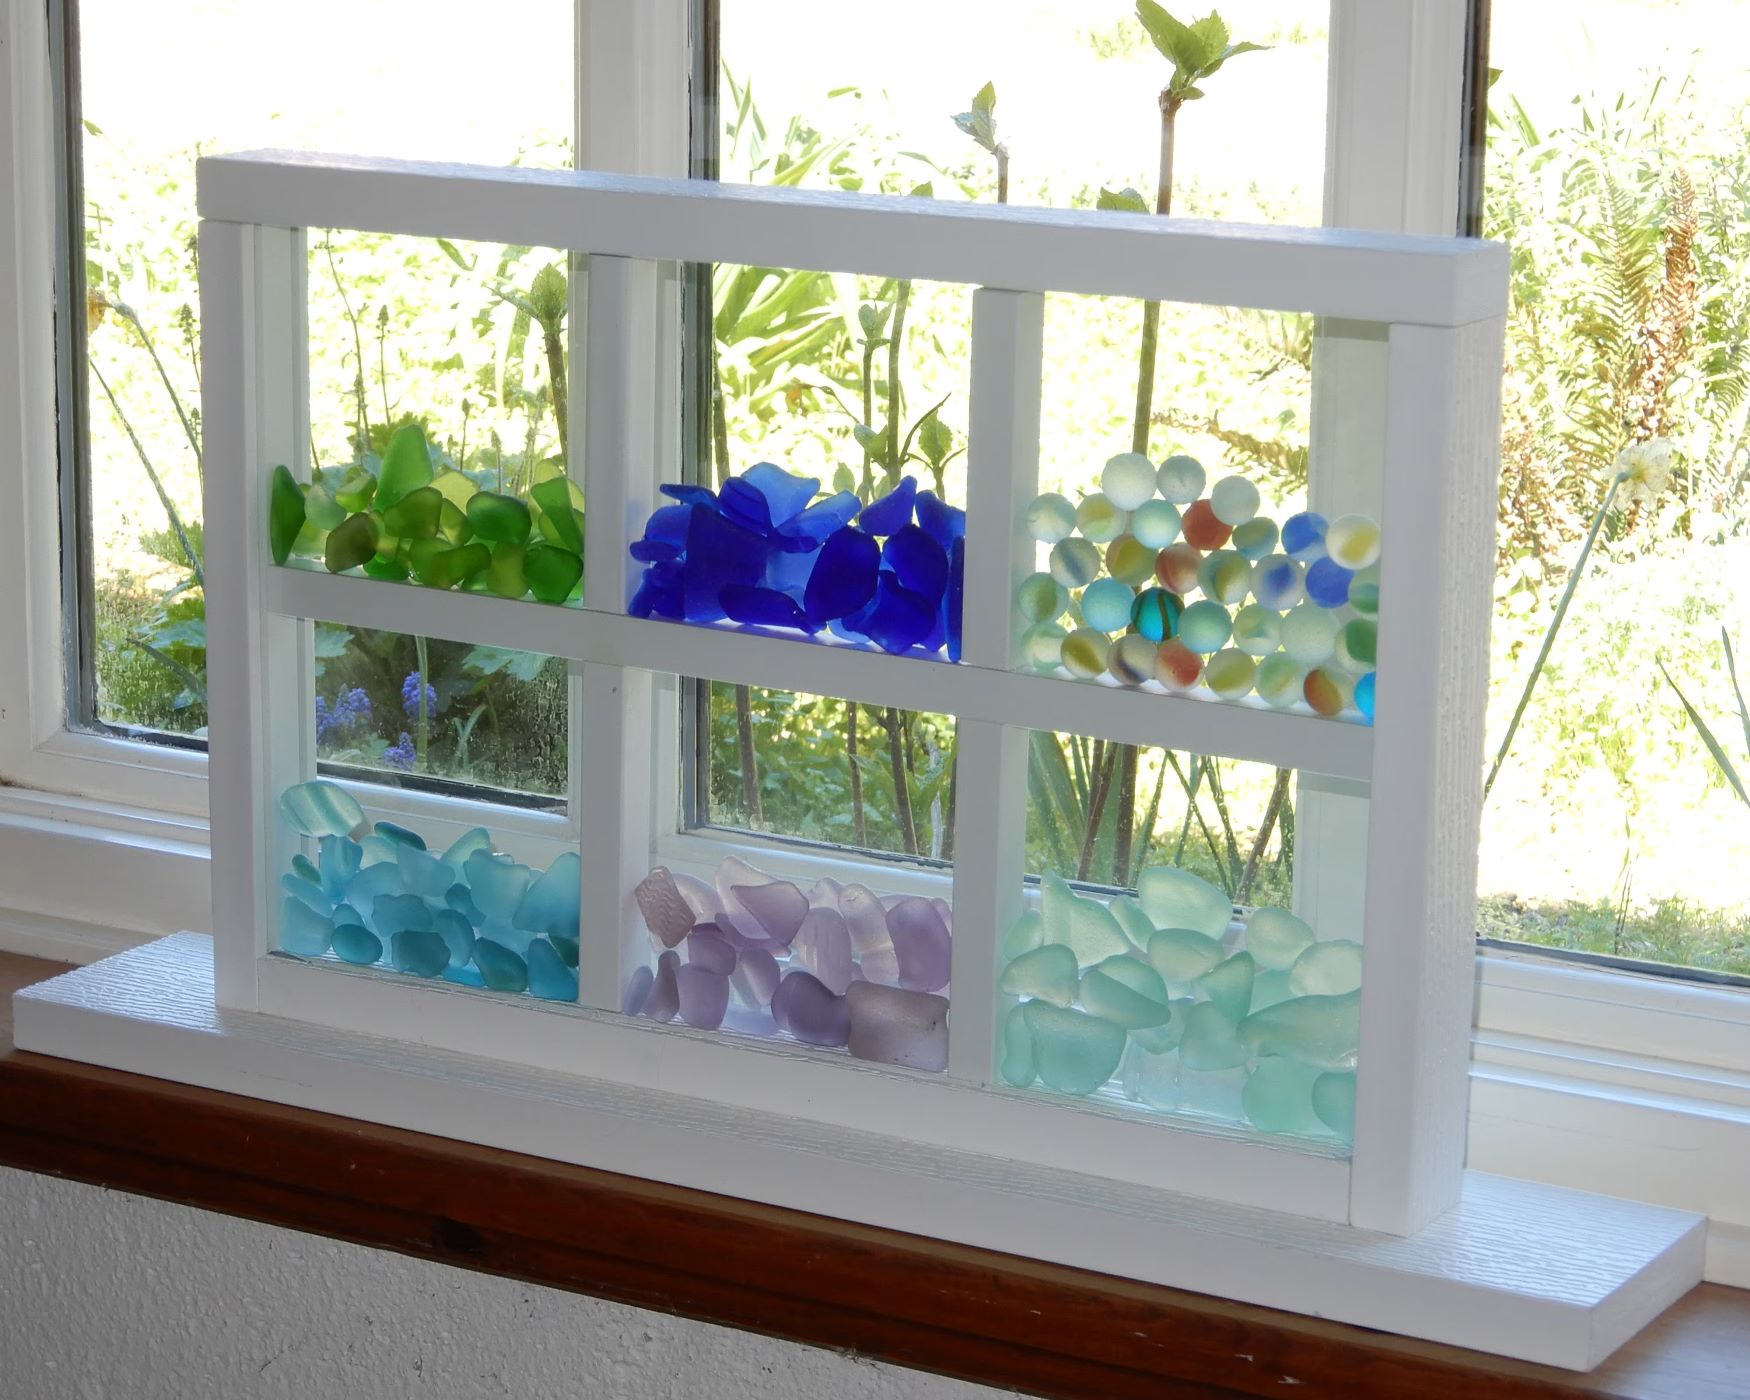 How To Display Sea Glass